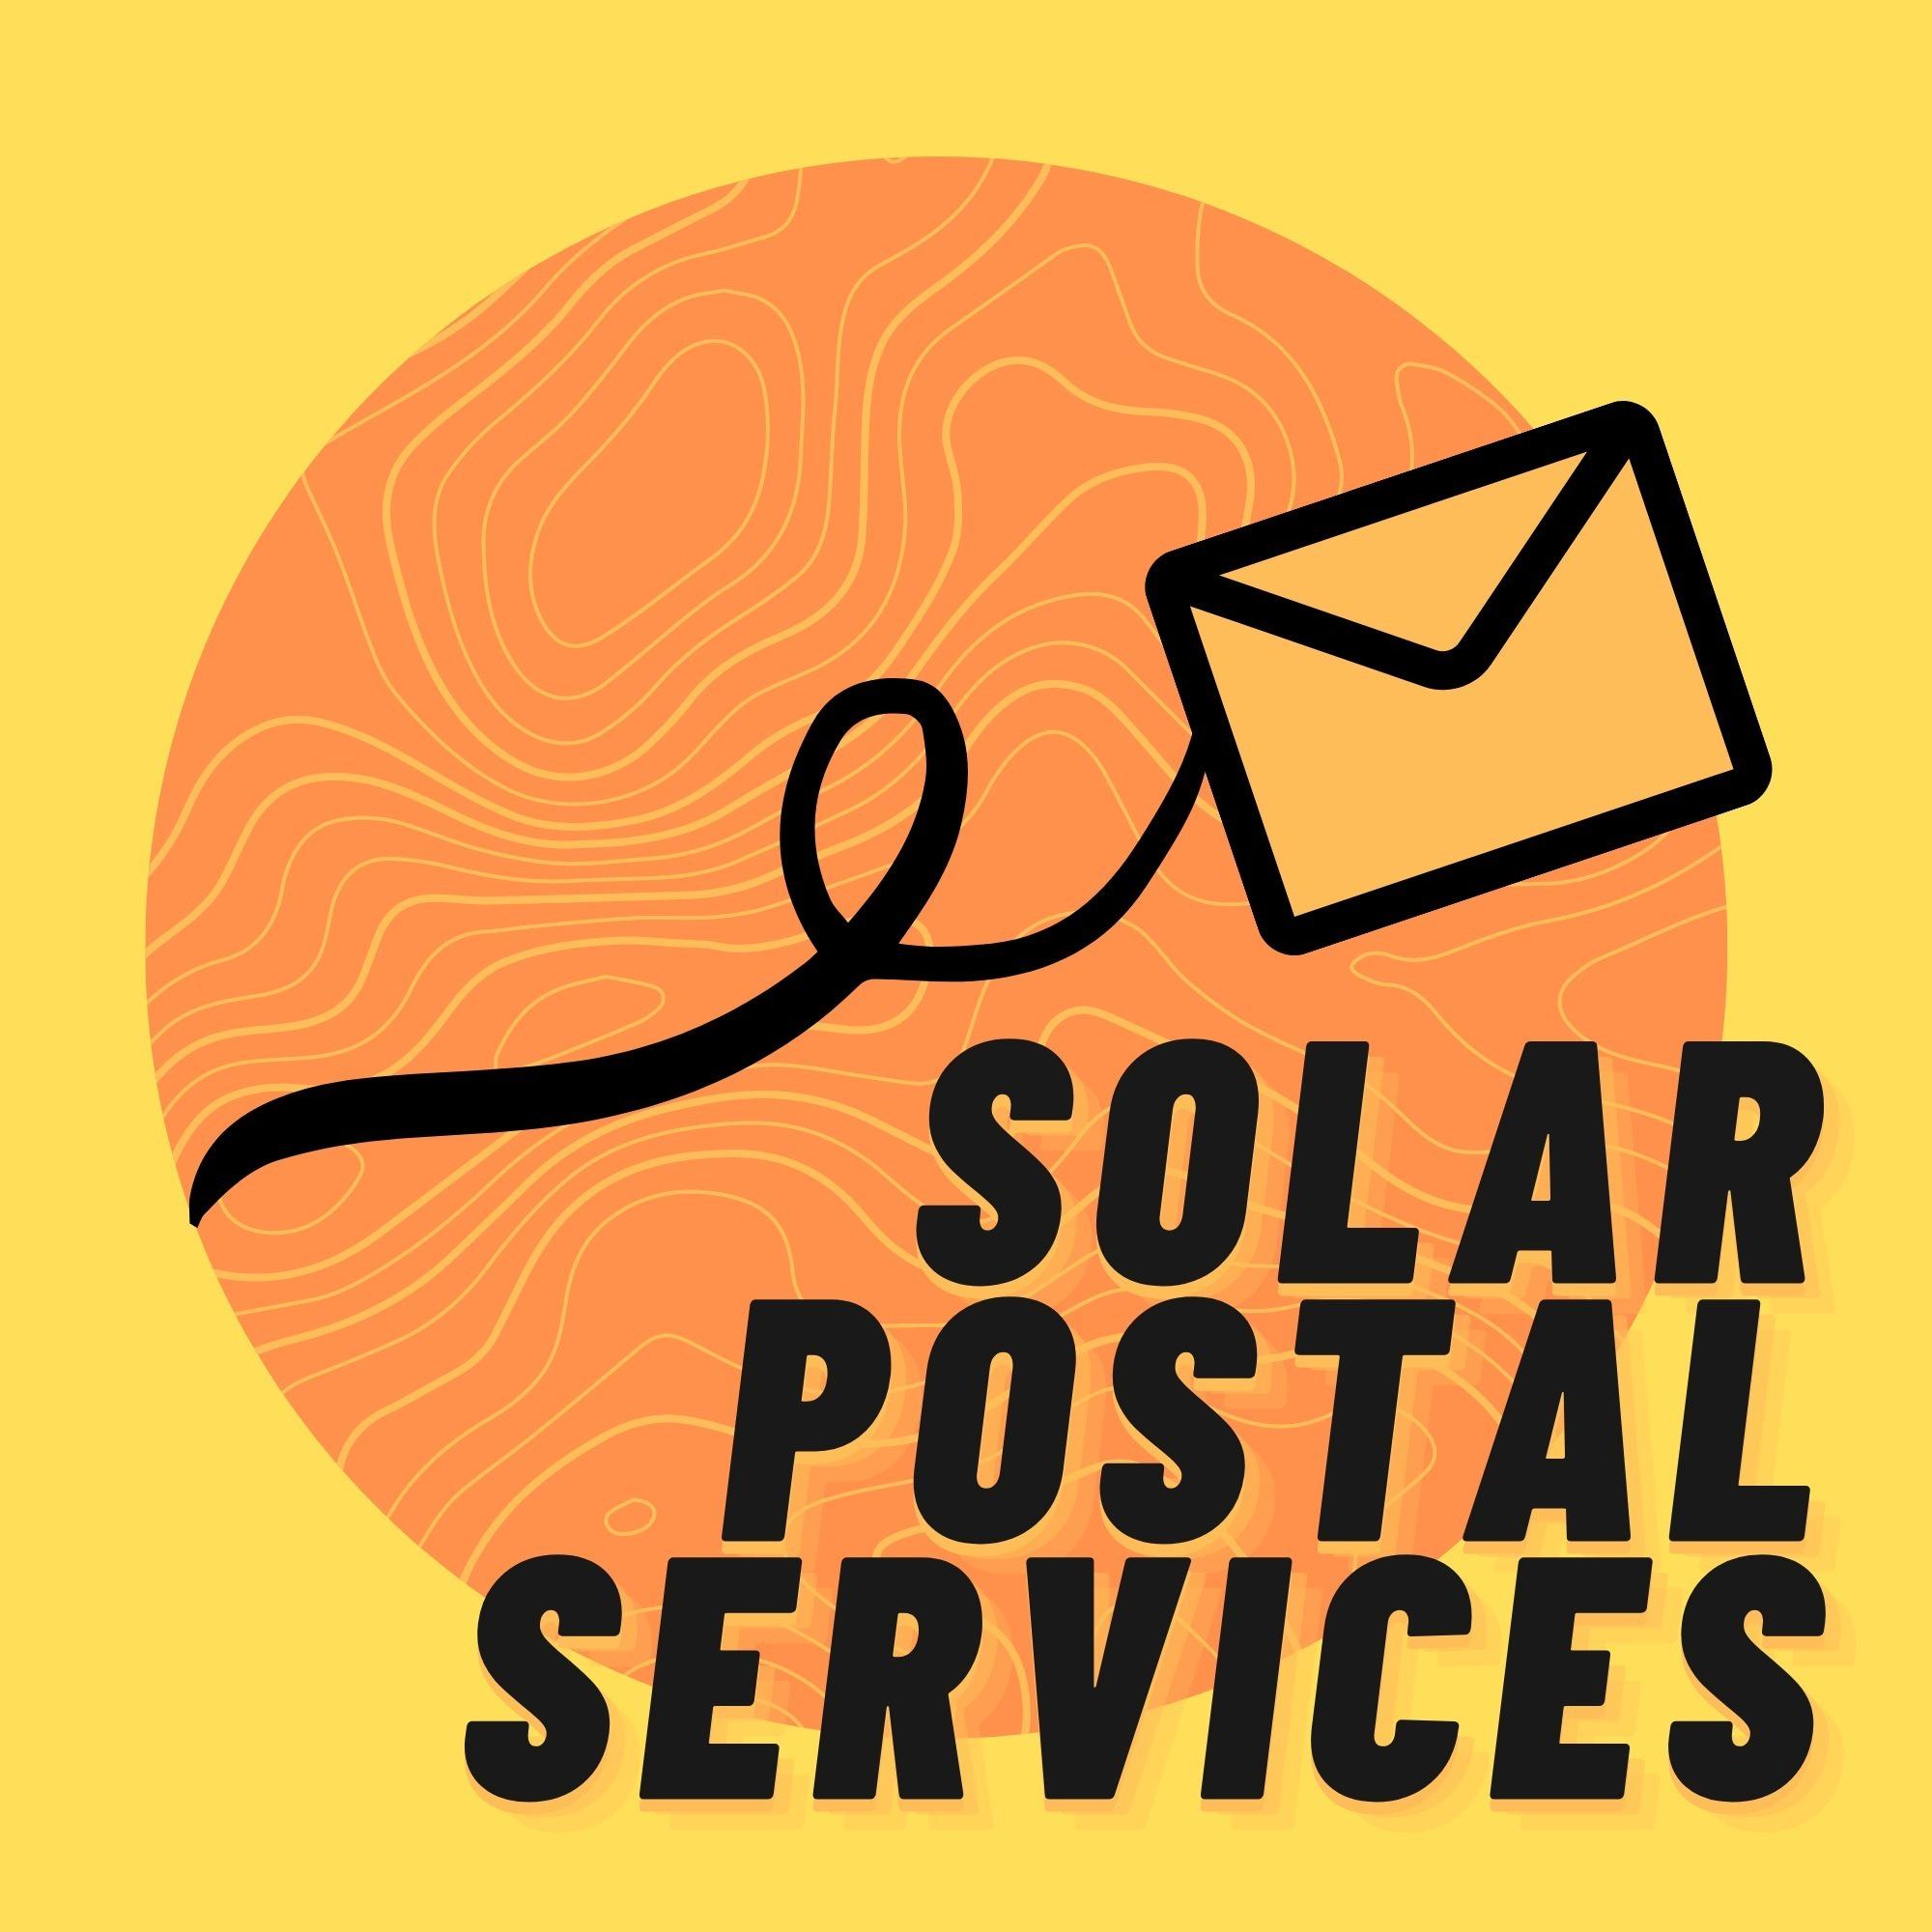 Solar Postal Services